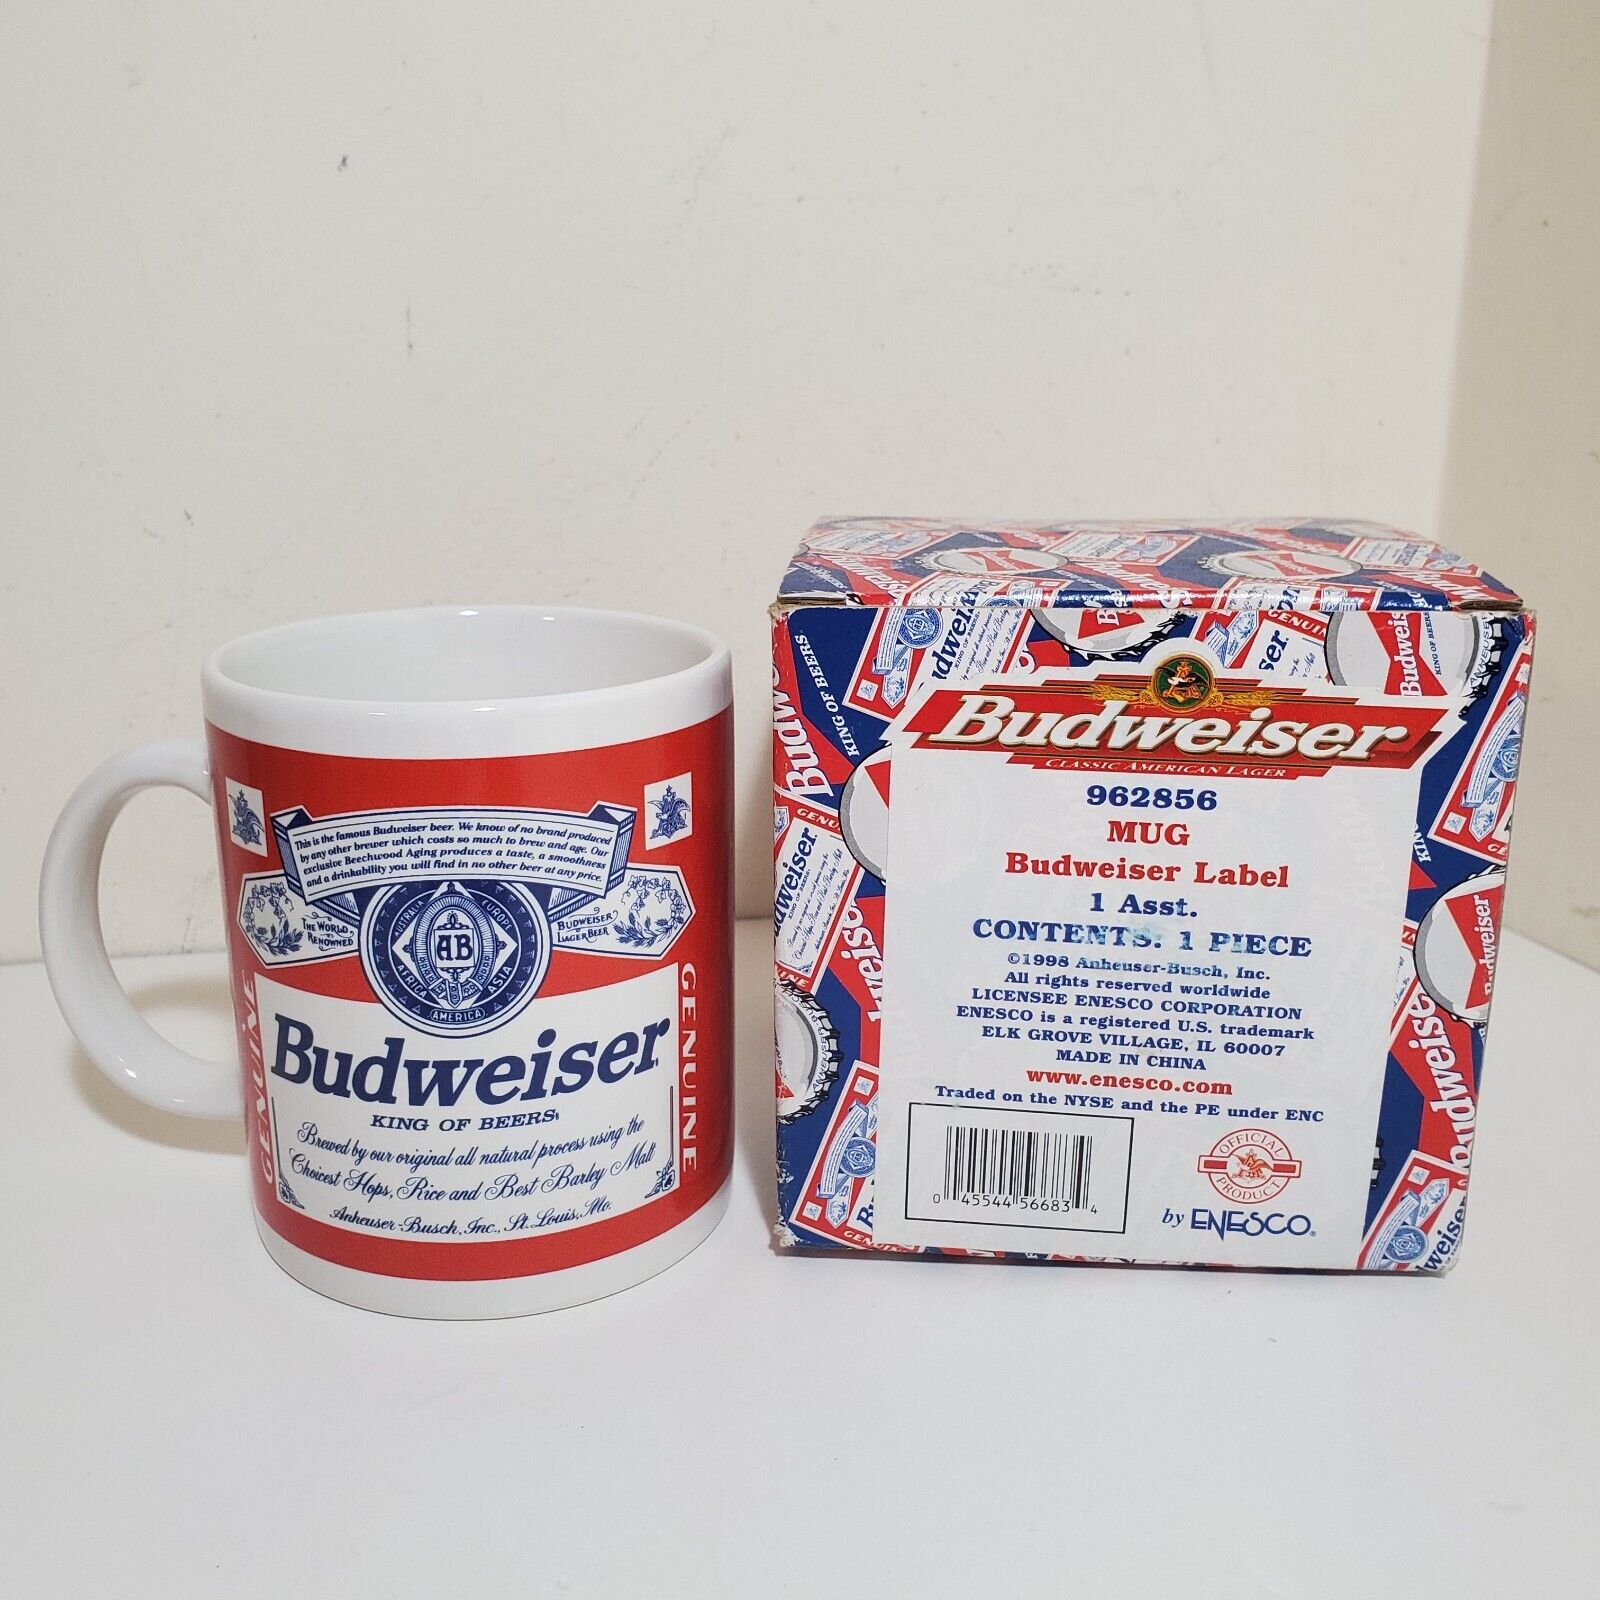 Budweiser Coffee Cup Mug - Official Anheuser-busch - Original Box